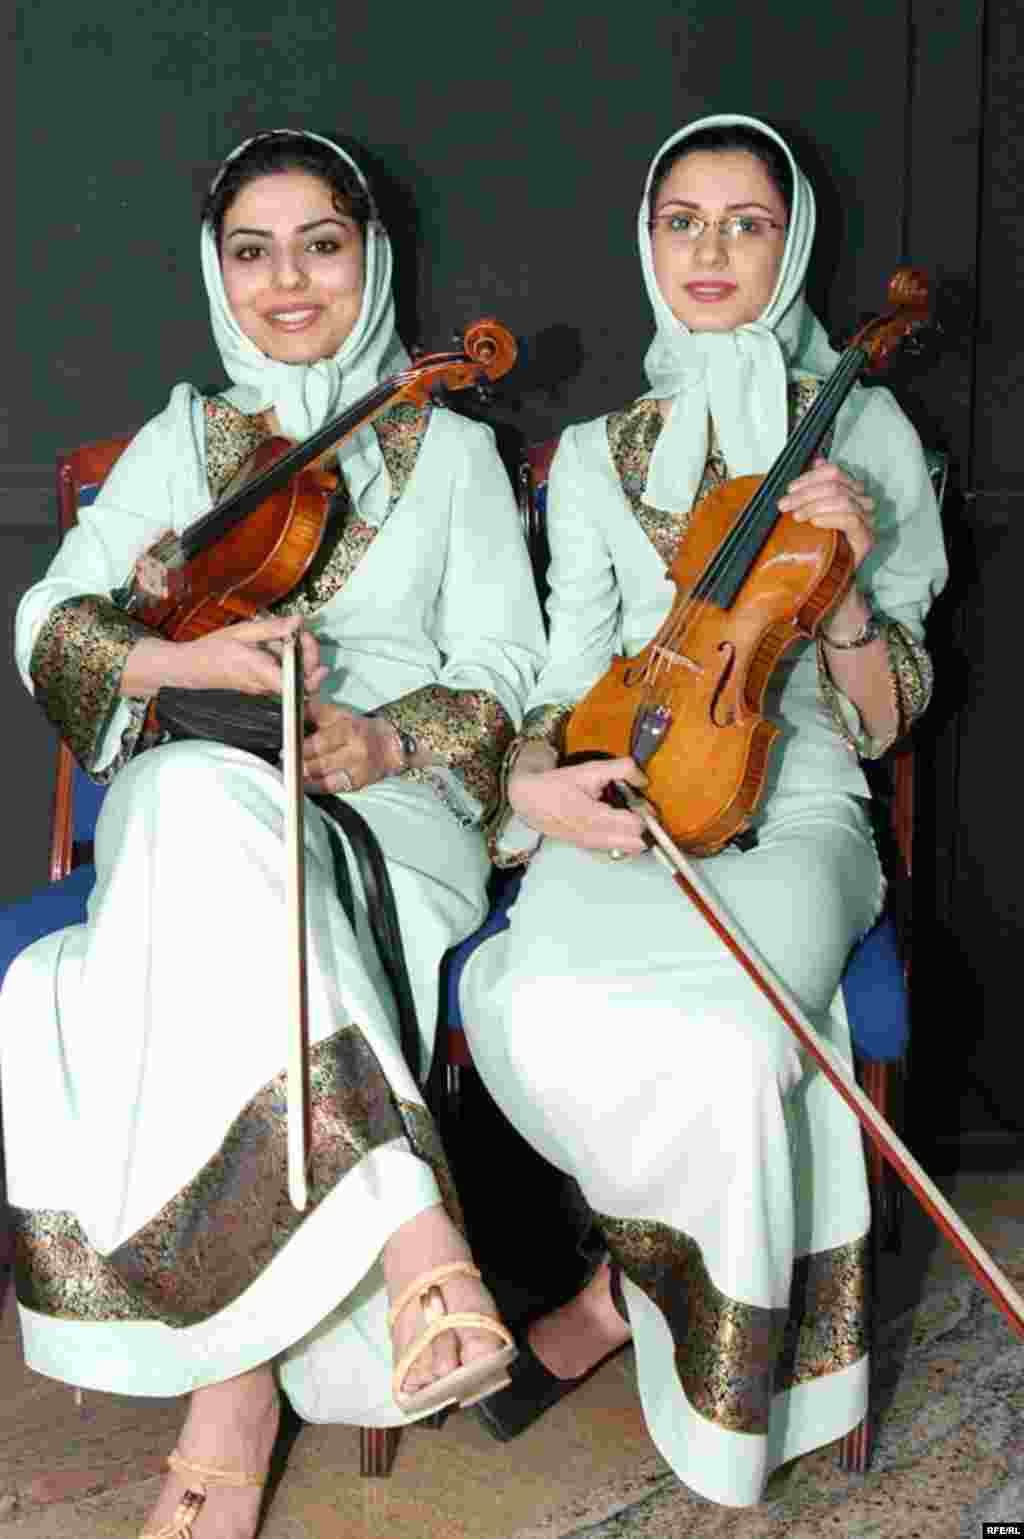 UAE, Darya Music Band, All women Iranian Band based in Iran, 03/31/2007